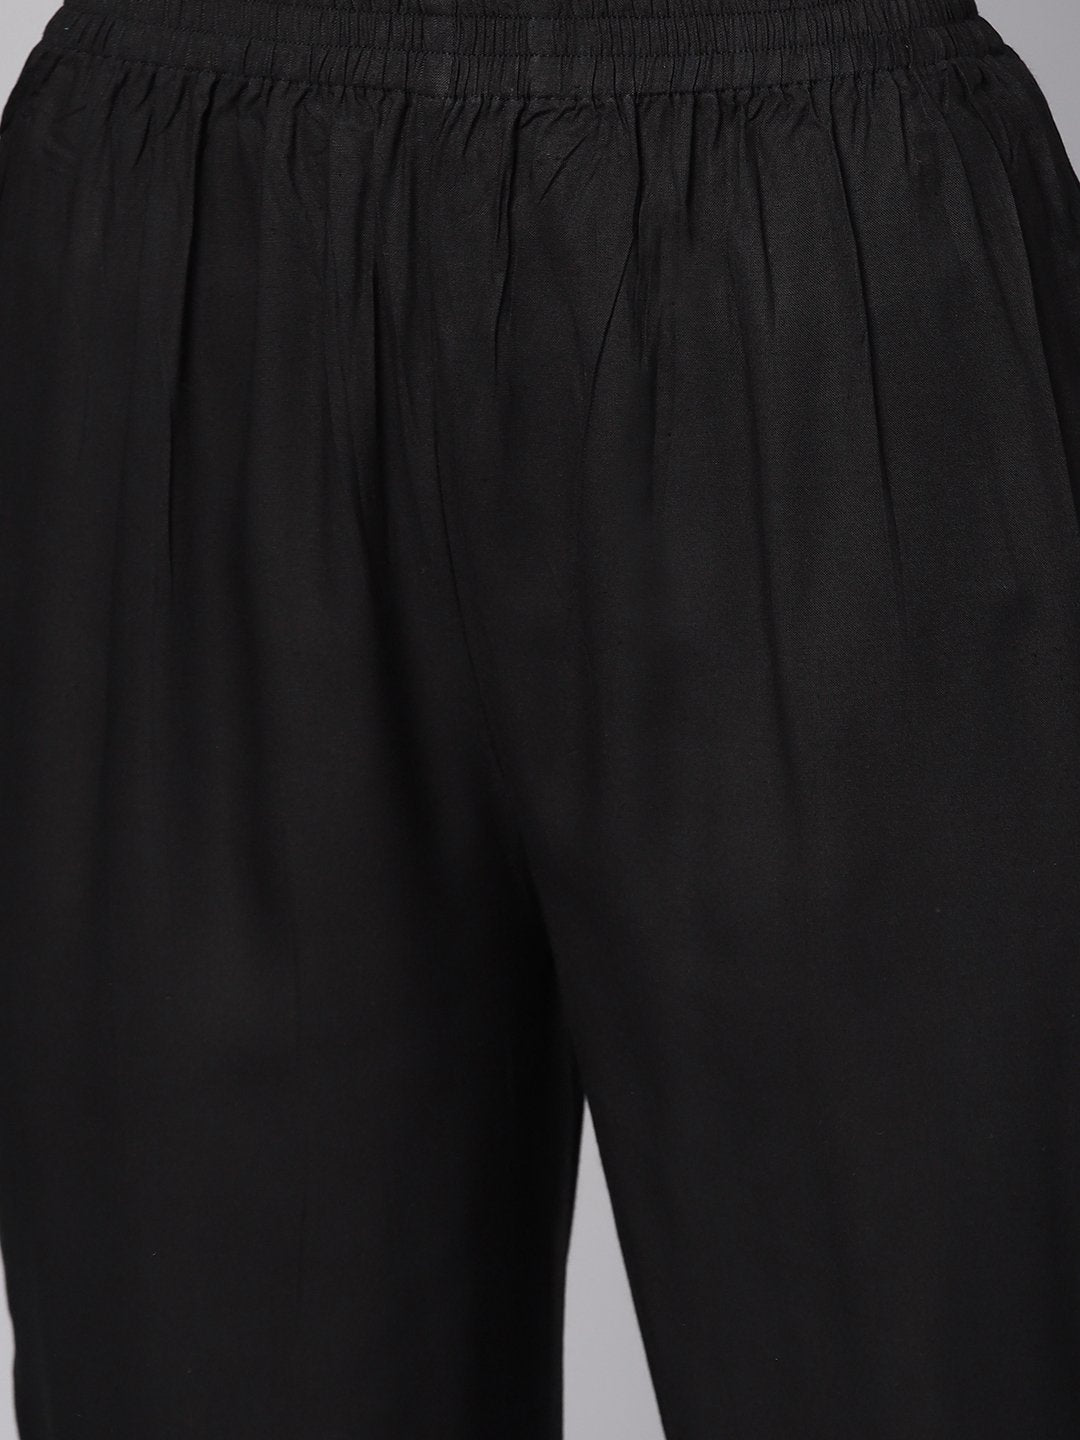 Women's Black & White Floral Printed Kurta Set With Pants - Nayo Clothing